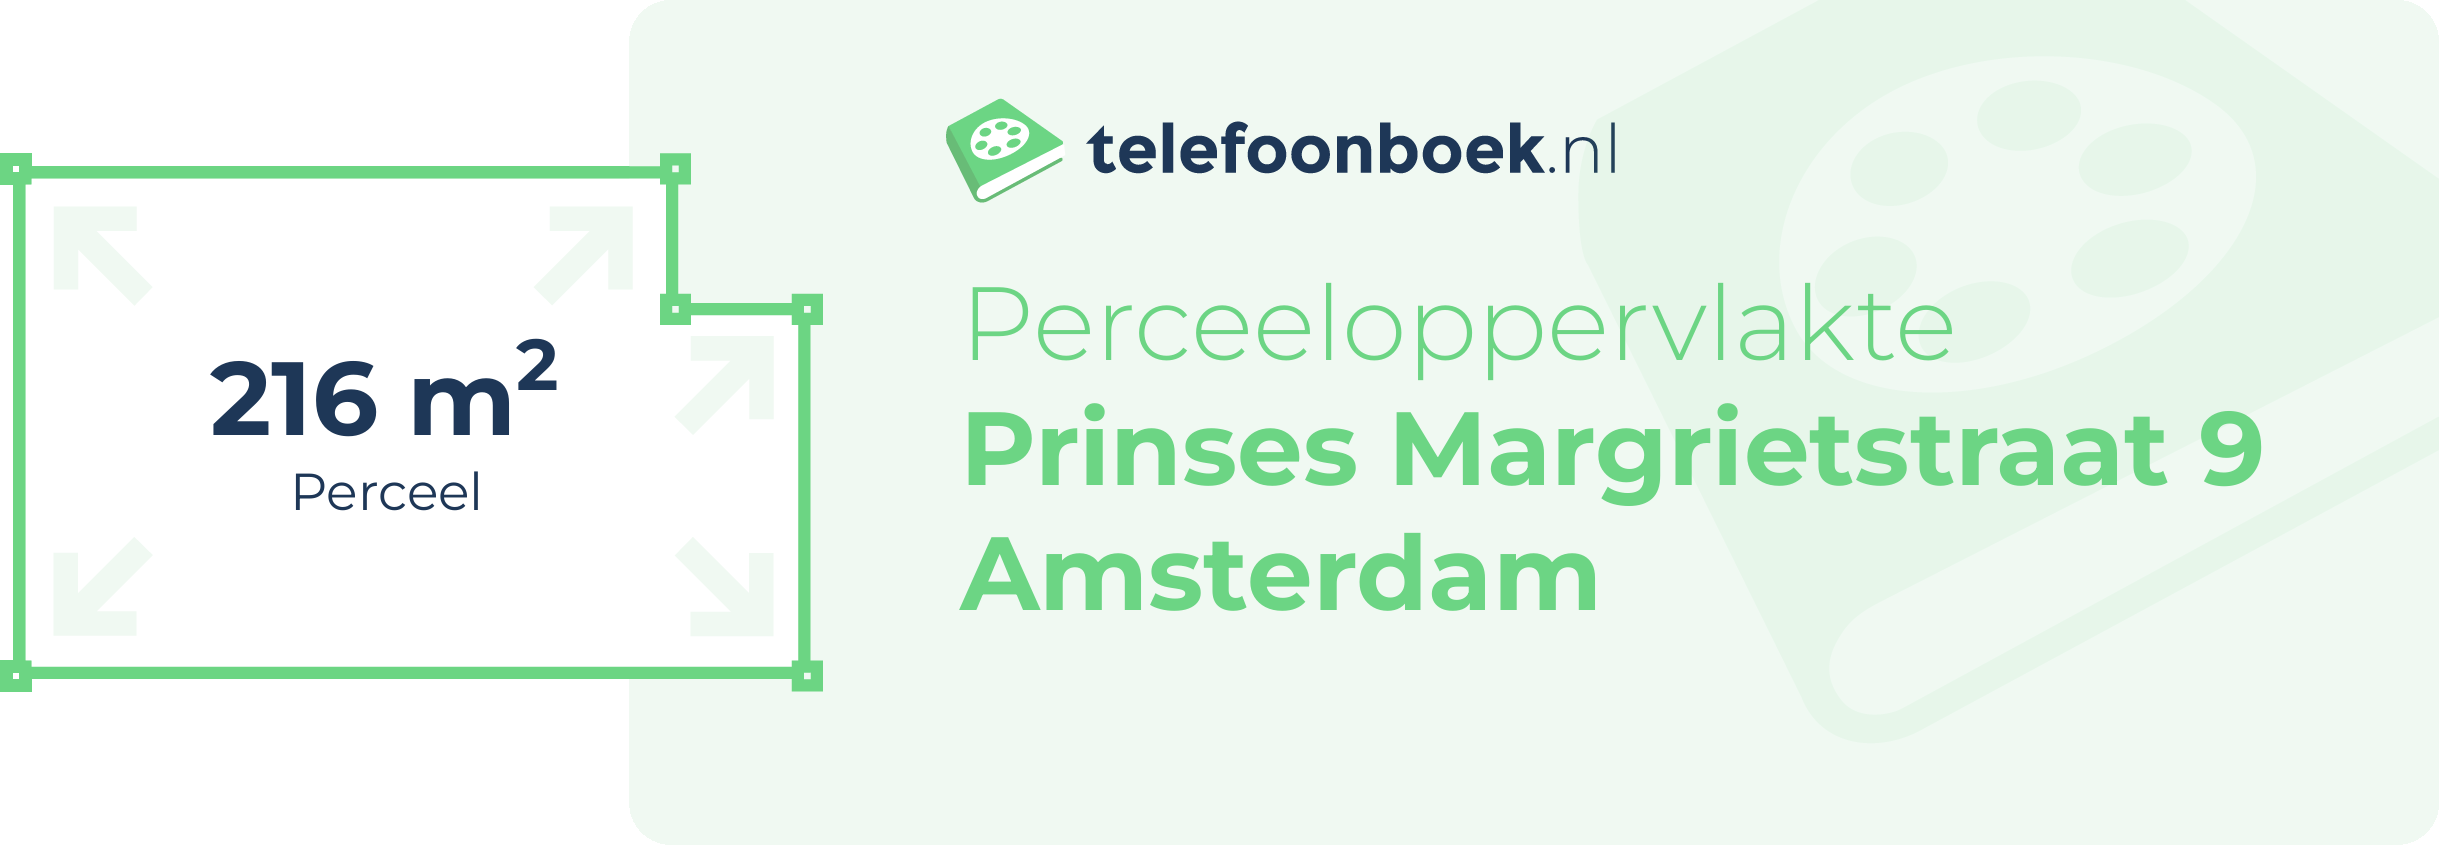 Perceeloppervlakte Prinses Margrietstraat 9 Amsterdam